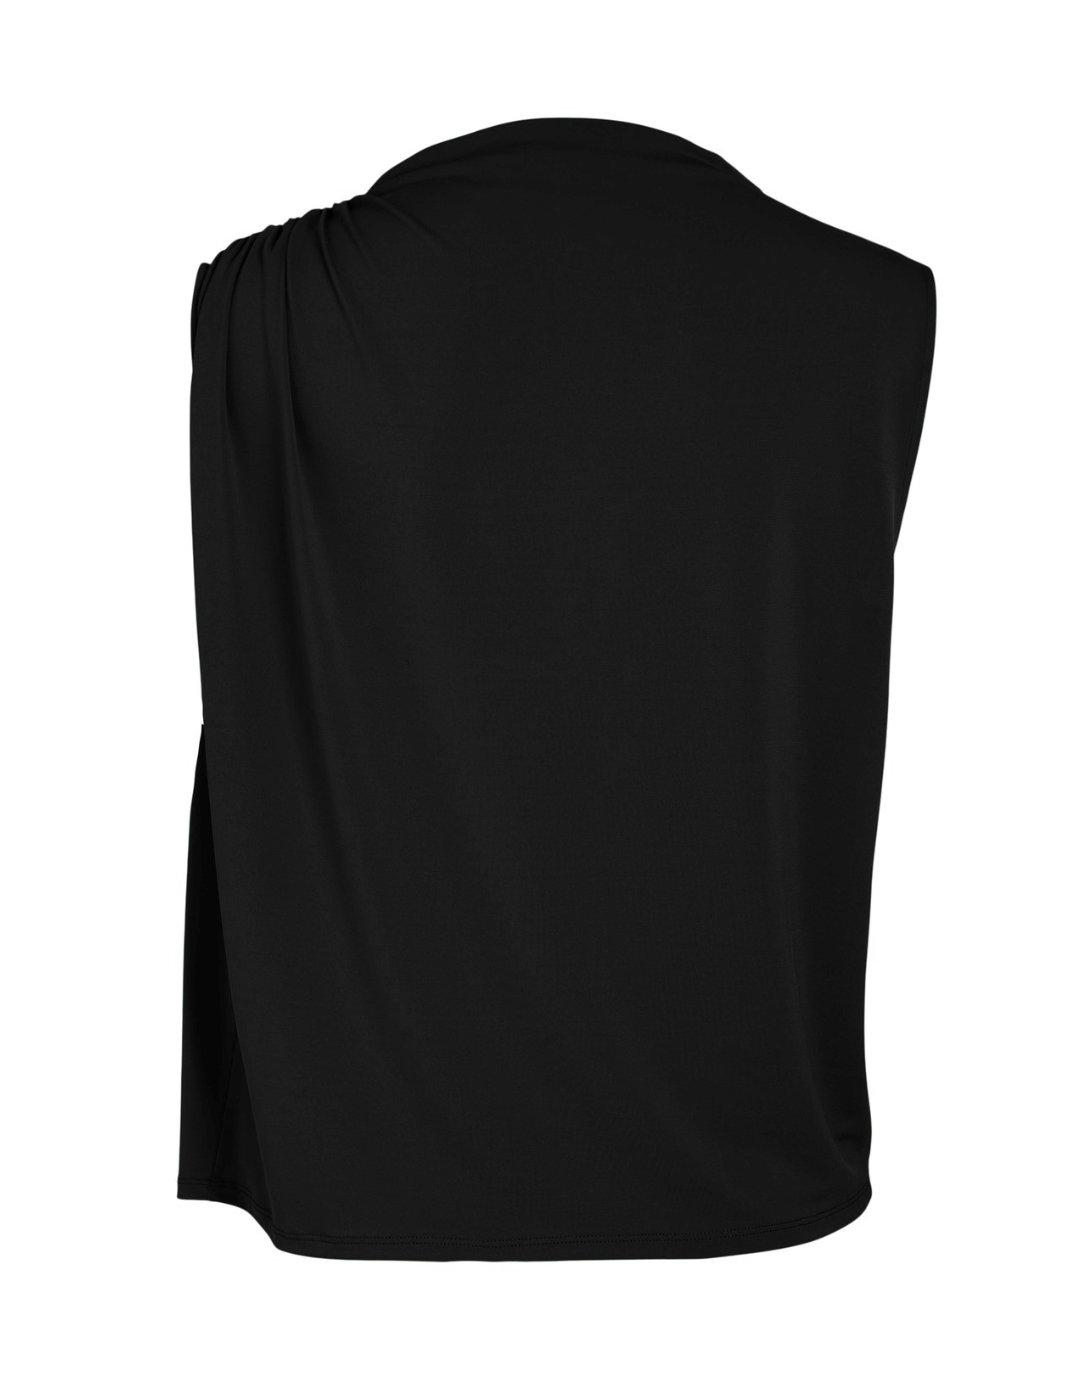 Camiseta Vila Phoenix ajustada negra fruncida para mujer